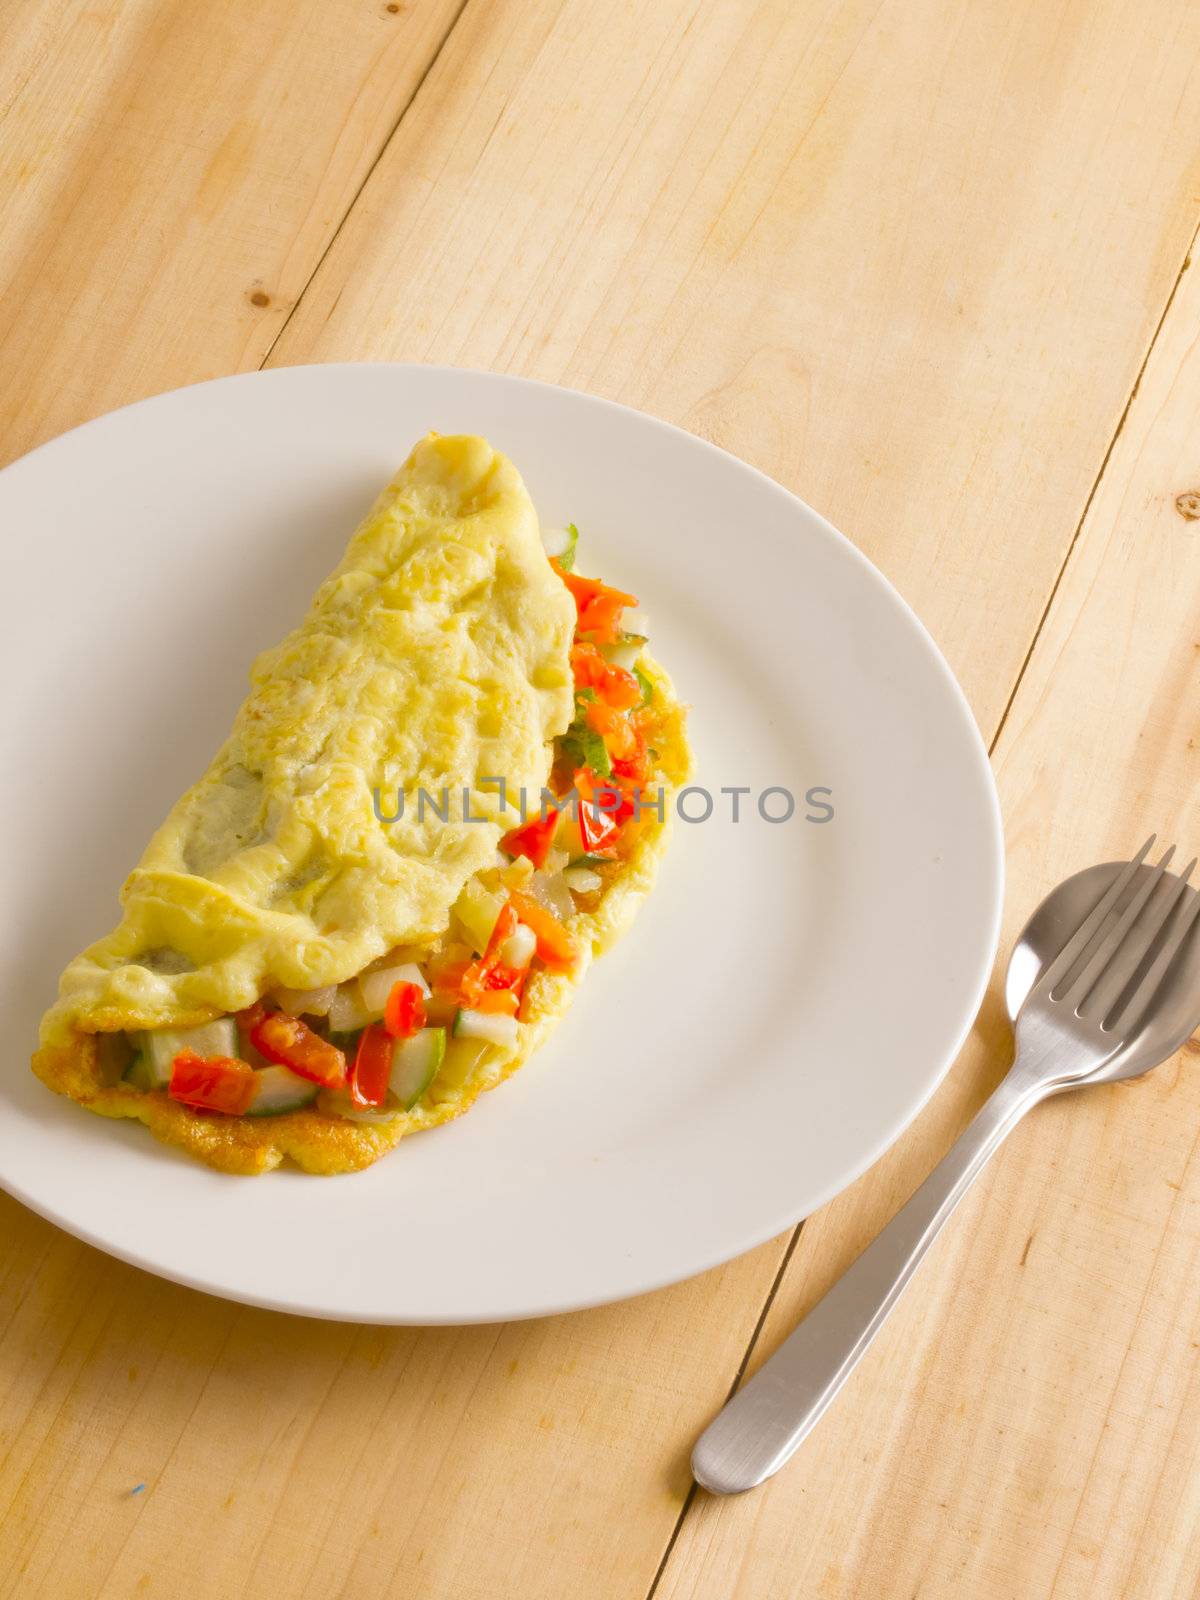 stuffed omelette by zkruger